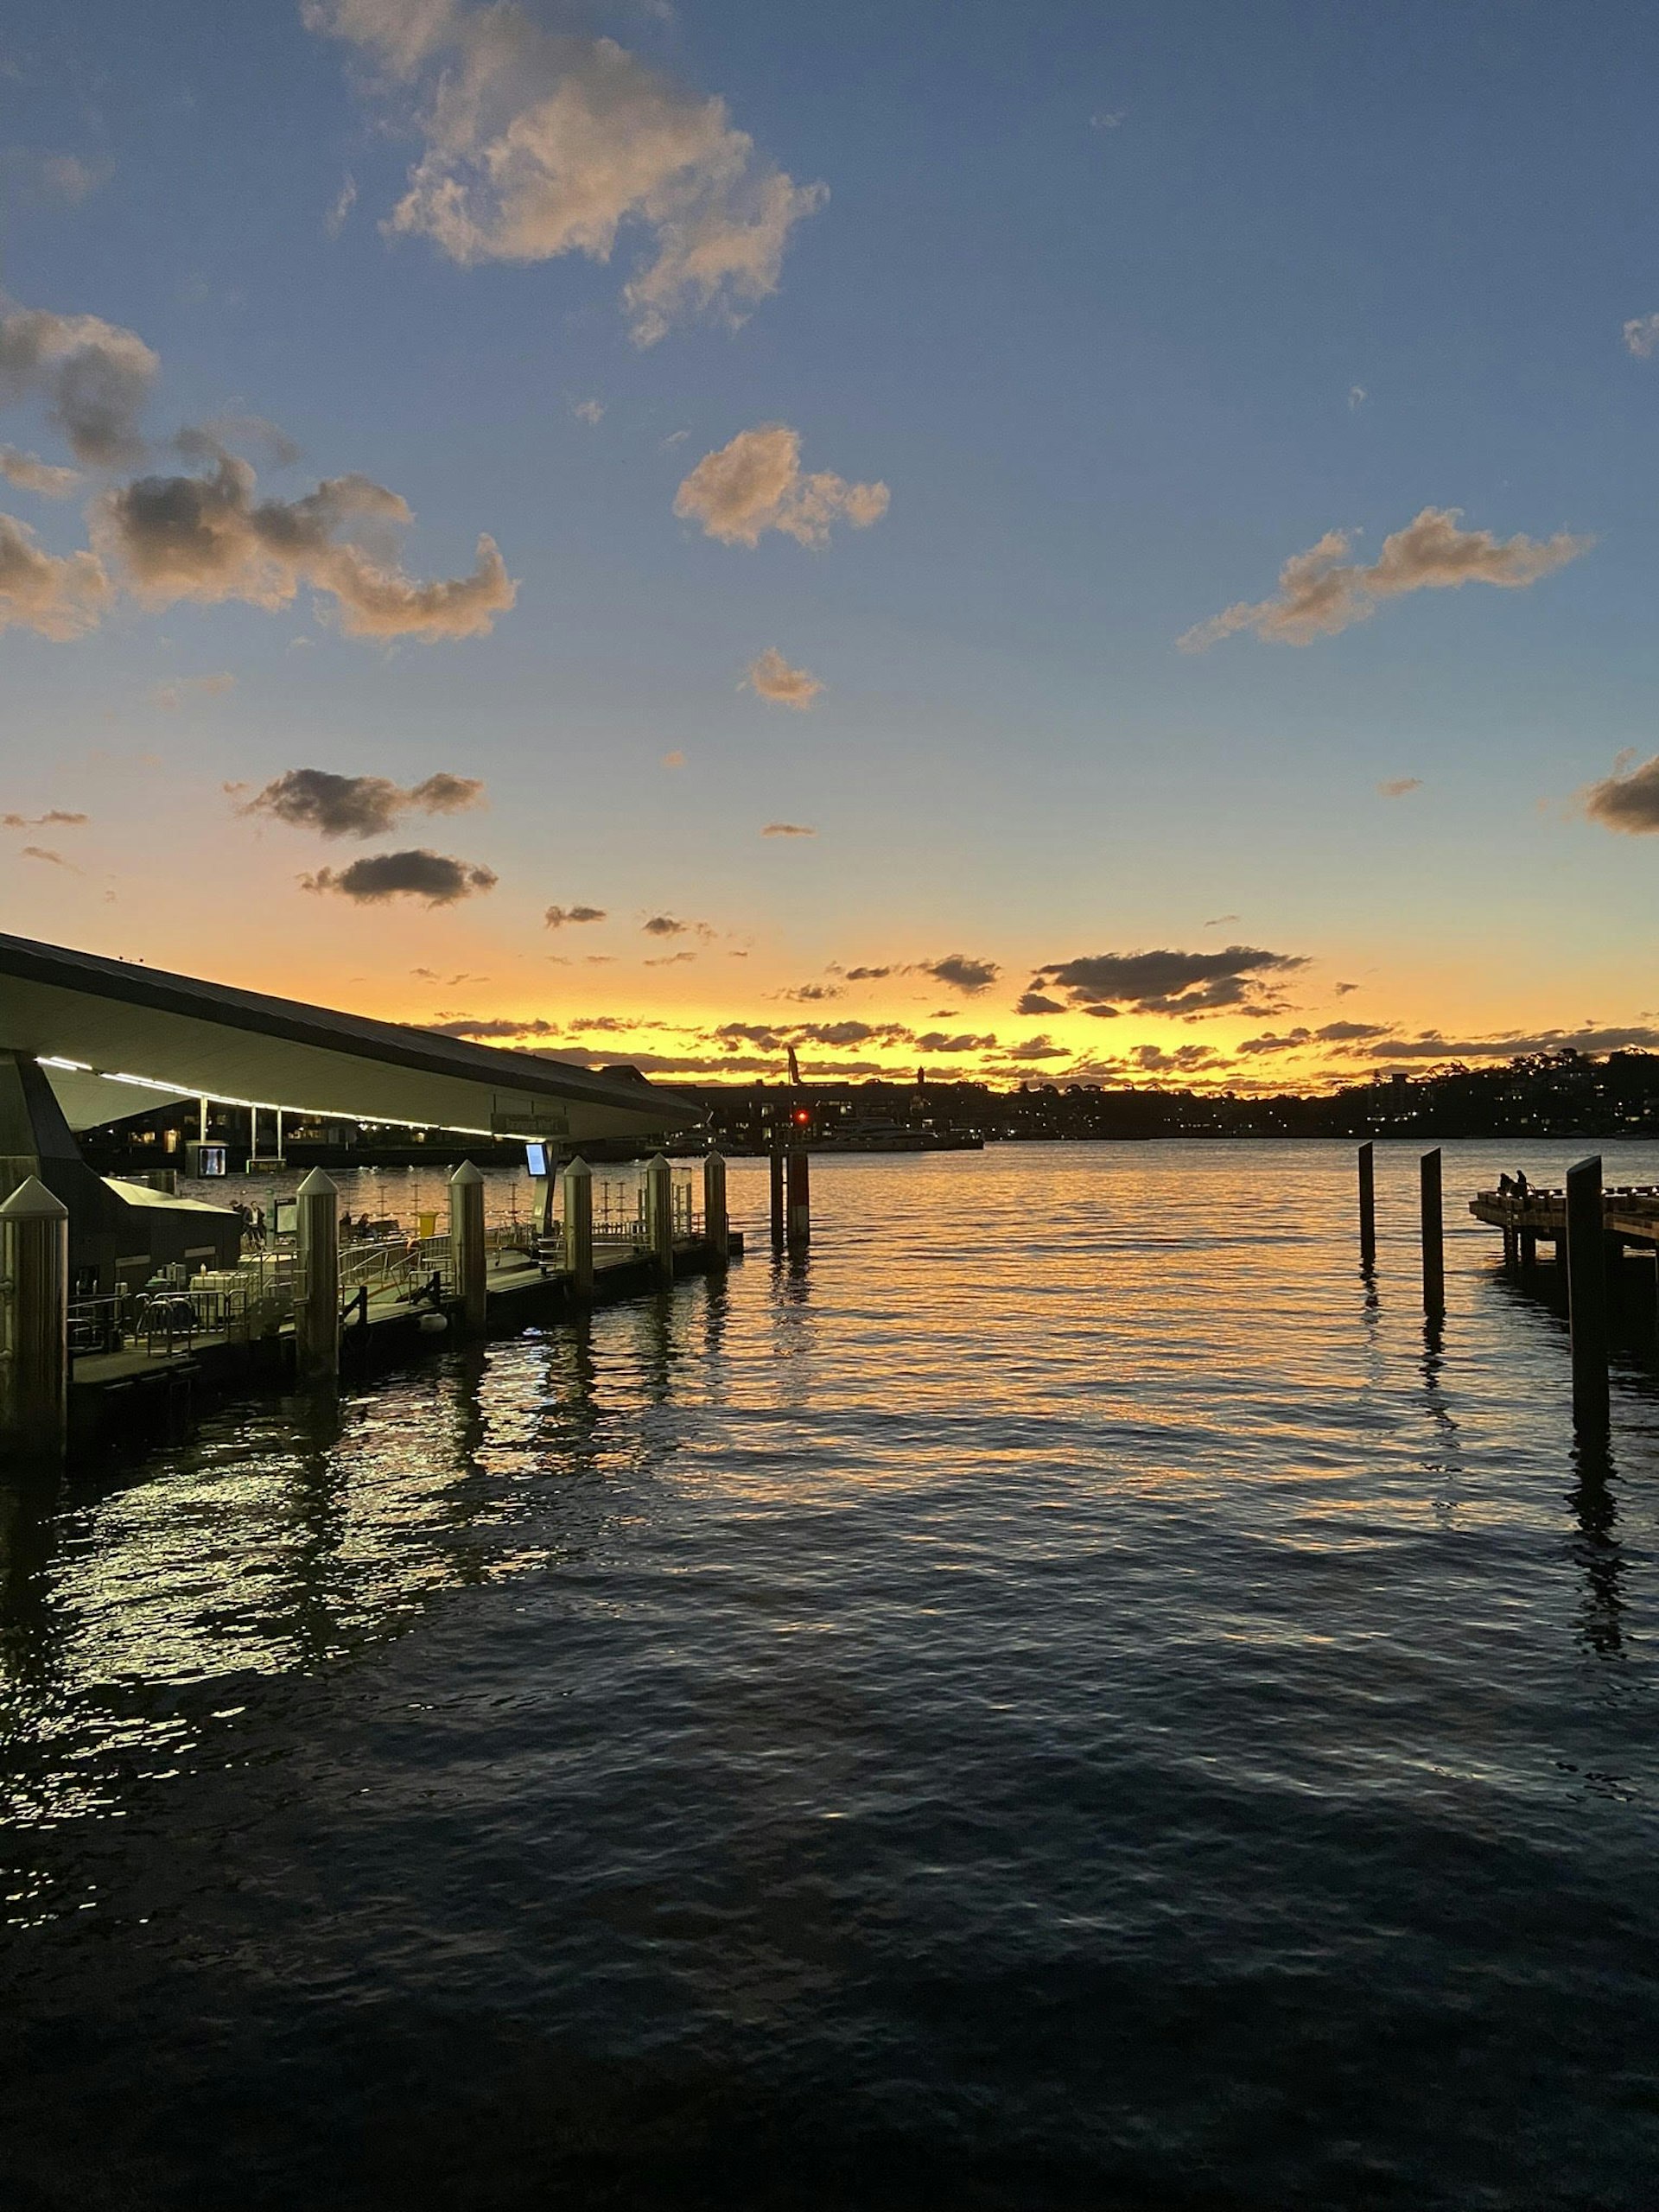 The sun sets on Sydney's harbor